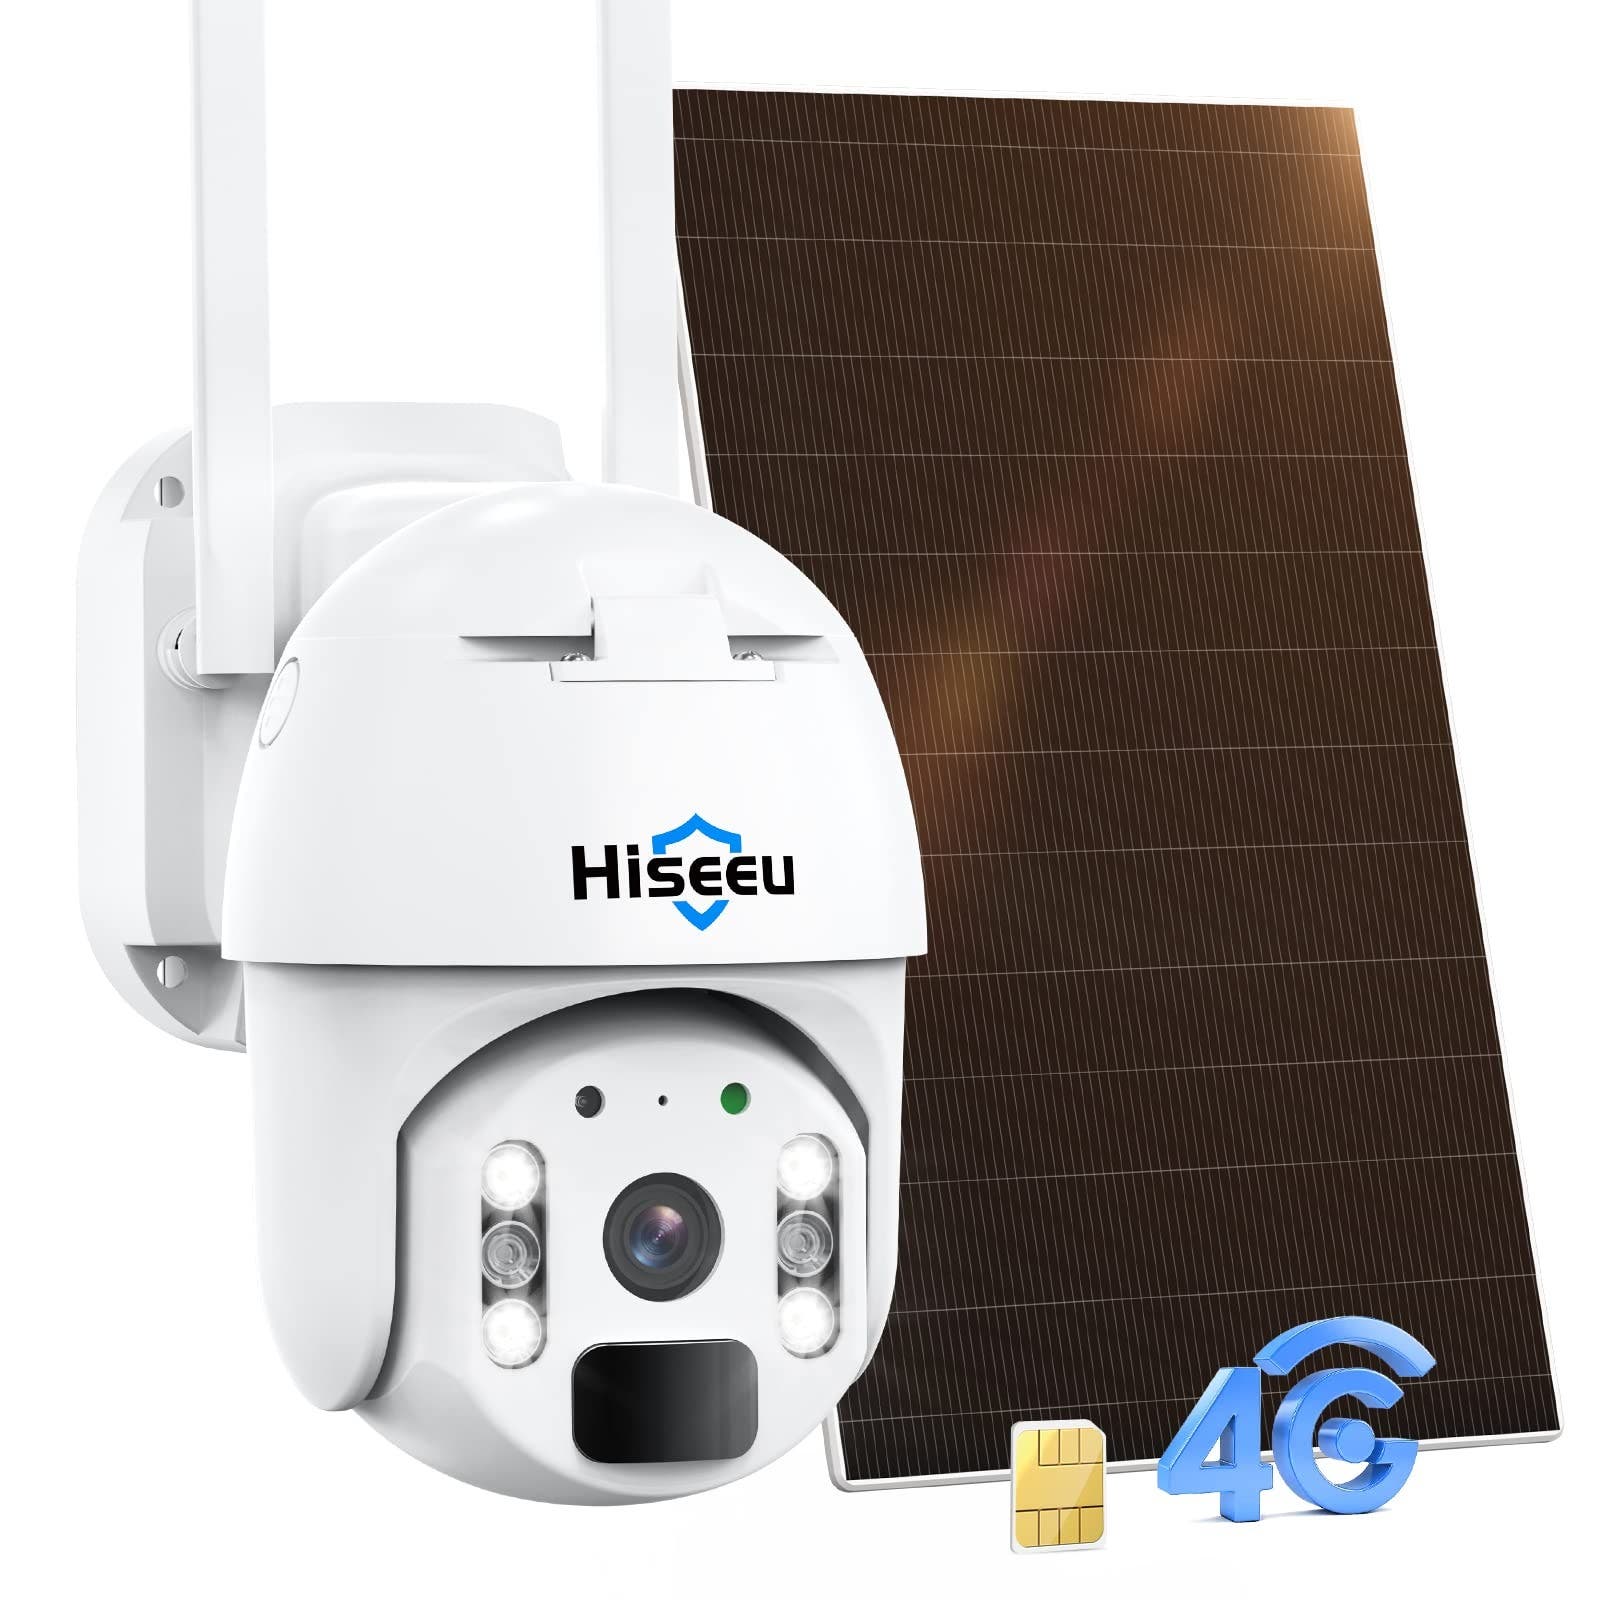 Hiseeu 3G/4G Security Camera